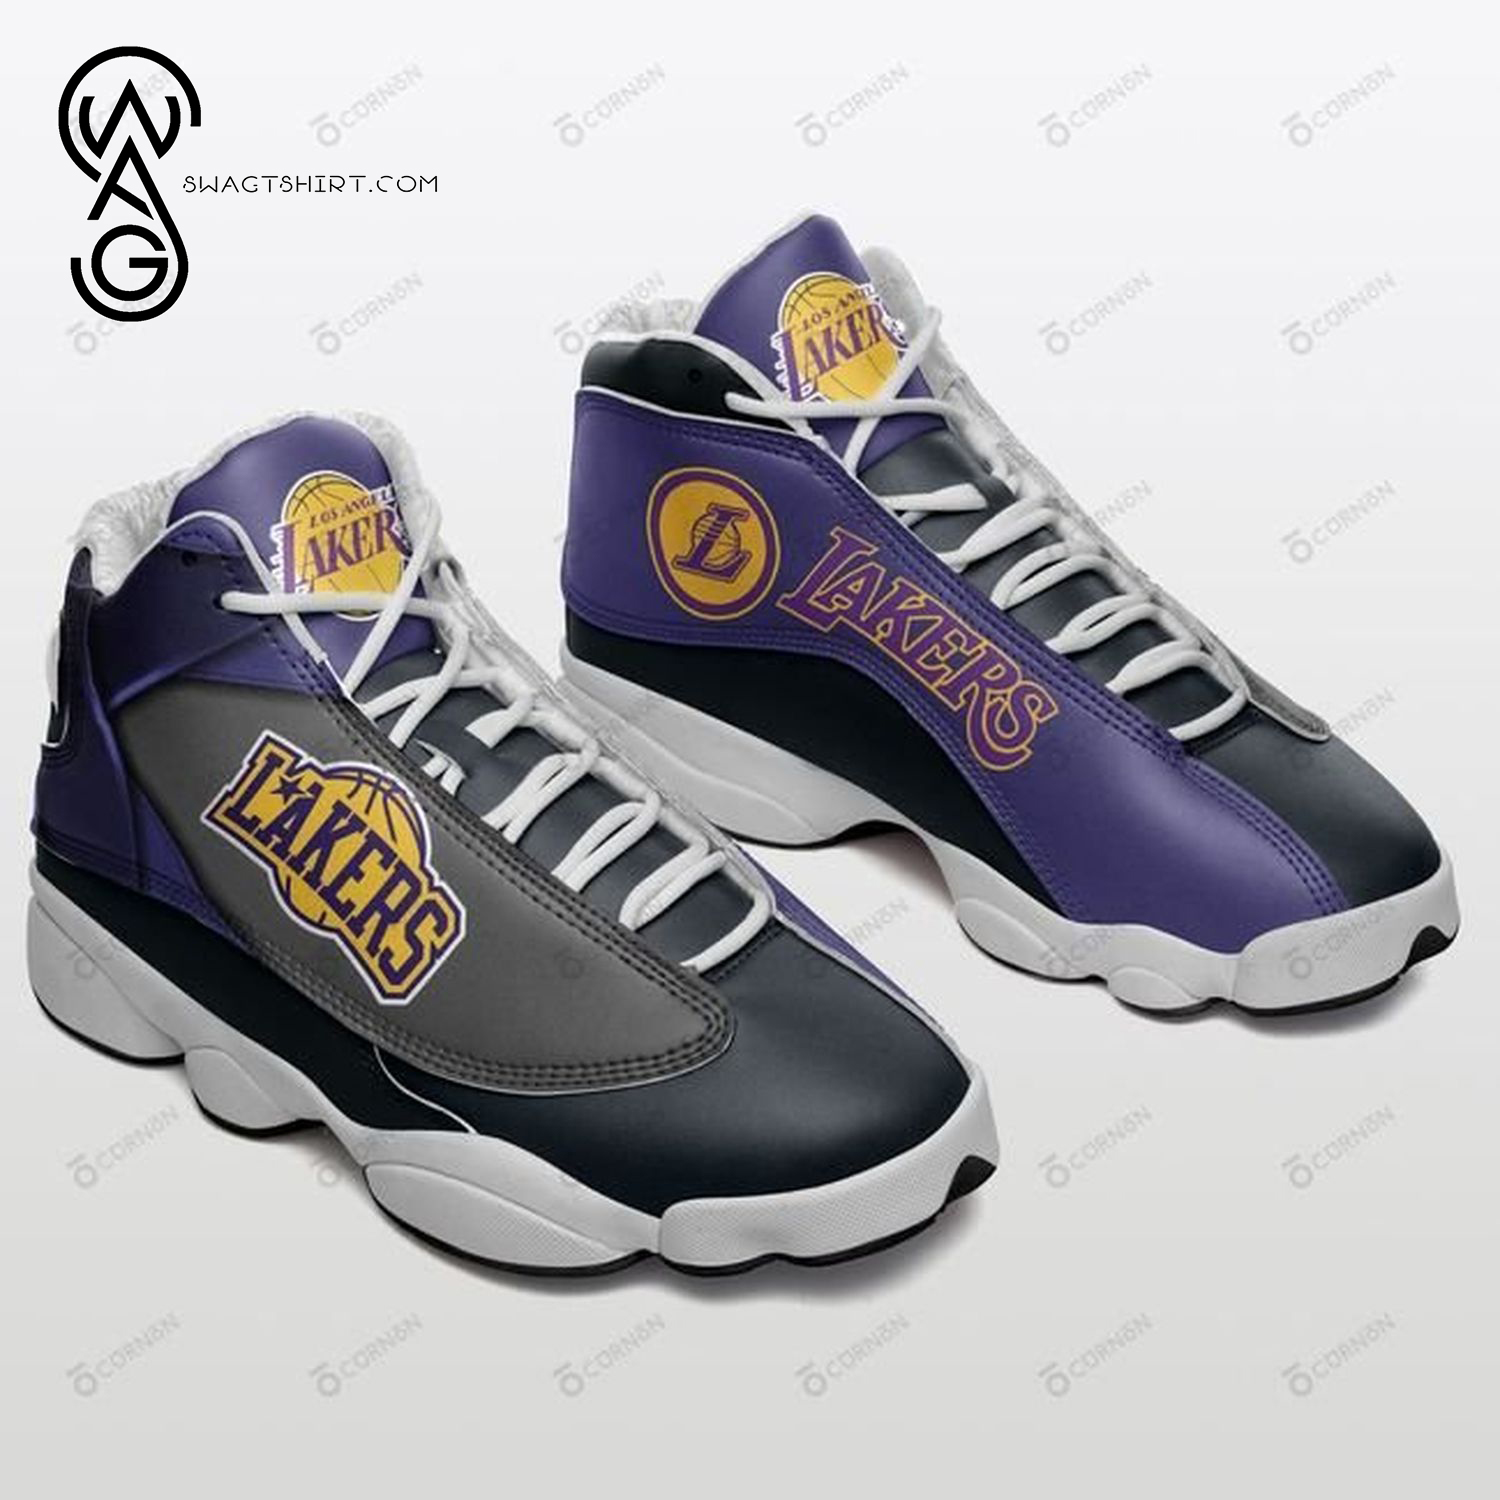 Los Angeles Lakers NBA Team Air Jordan 13 Shoes